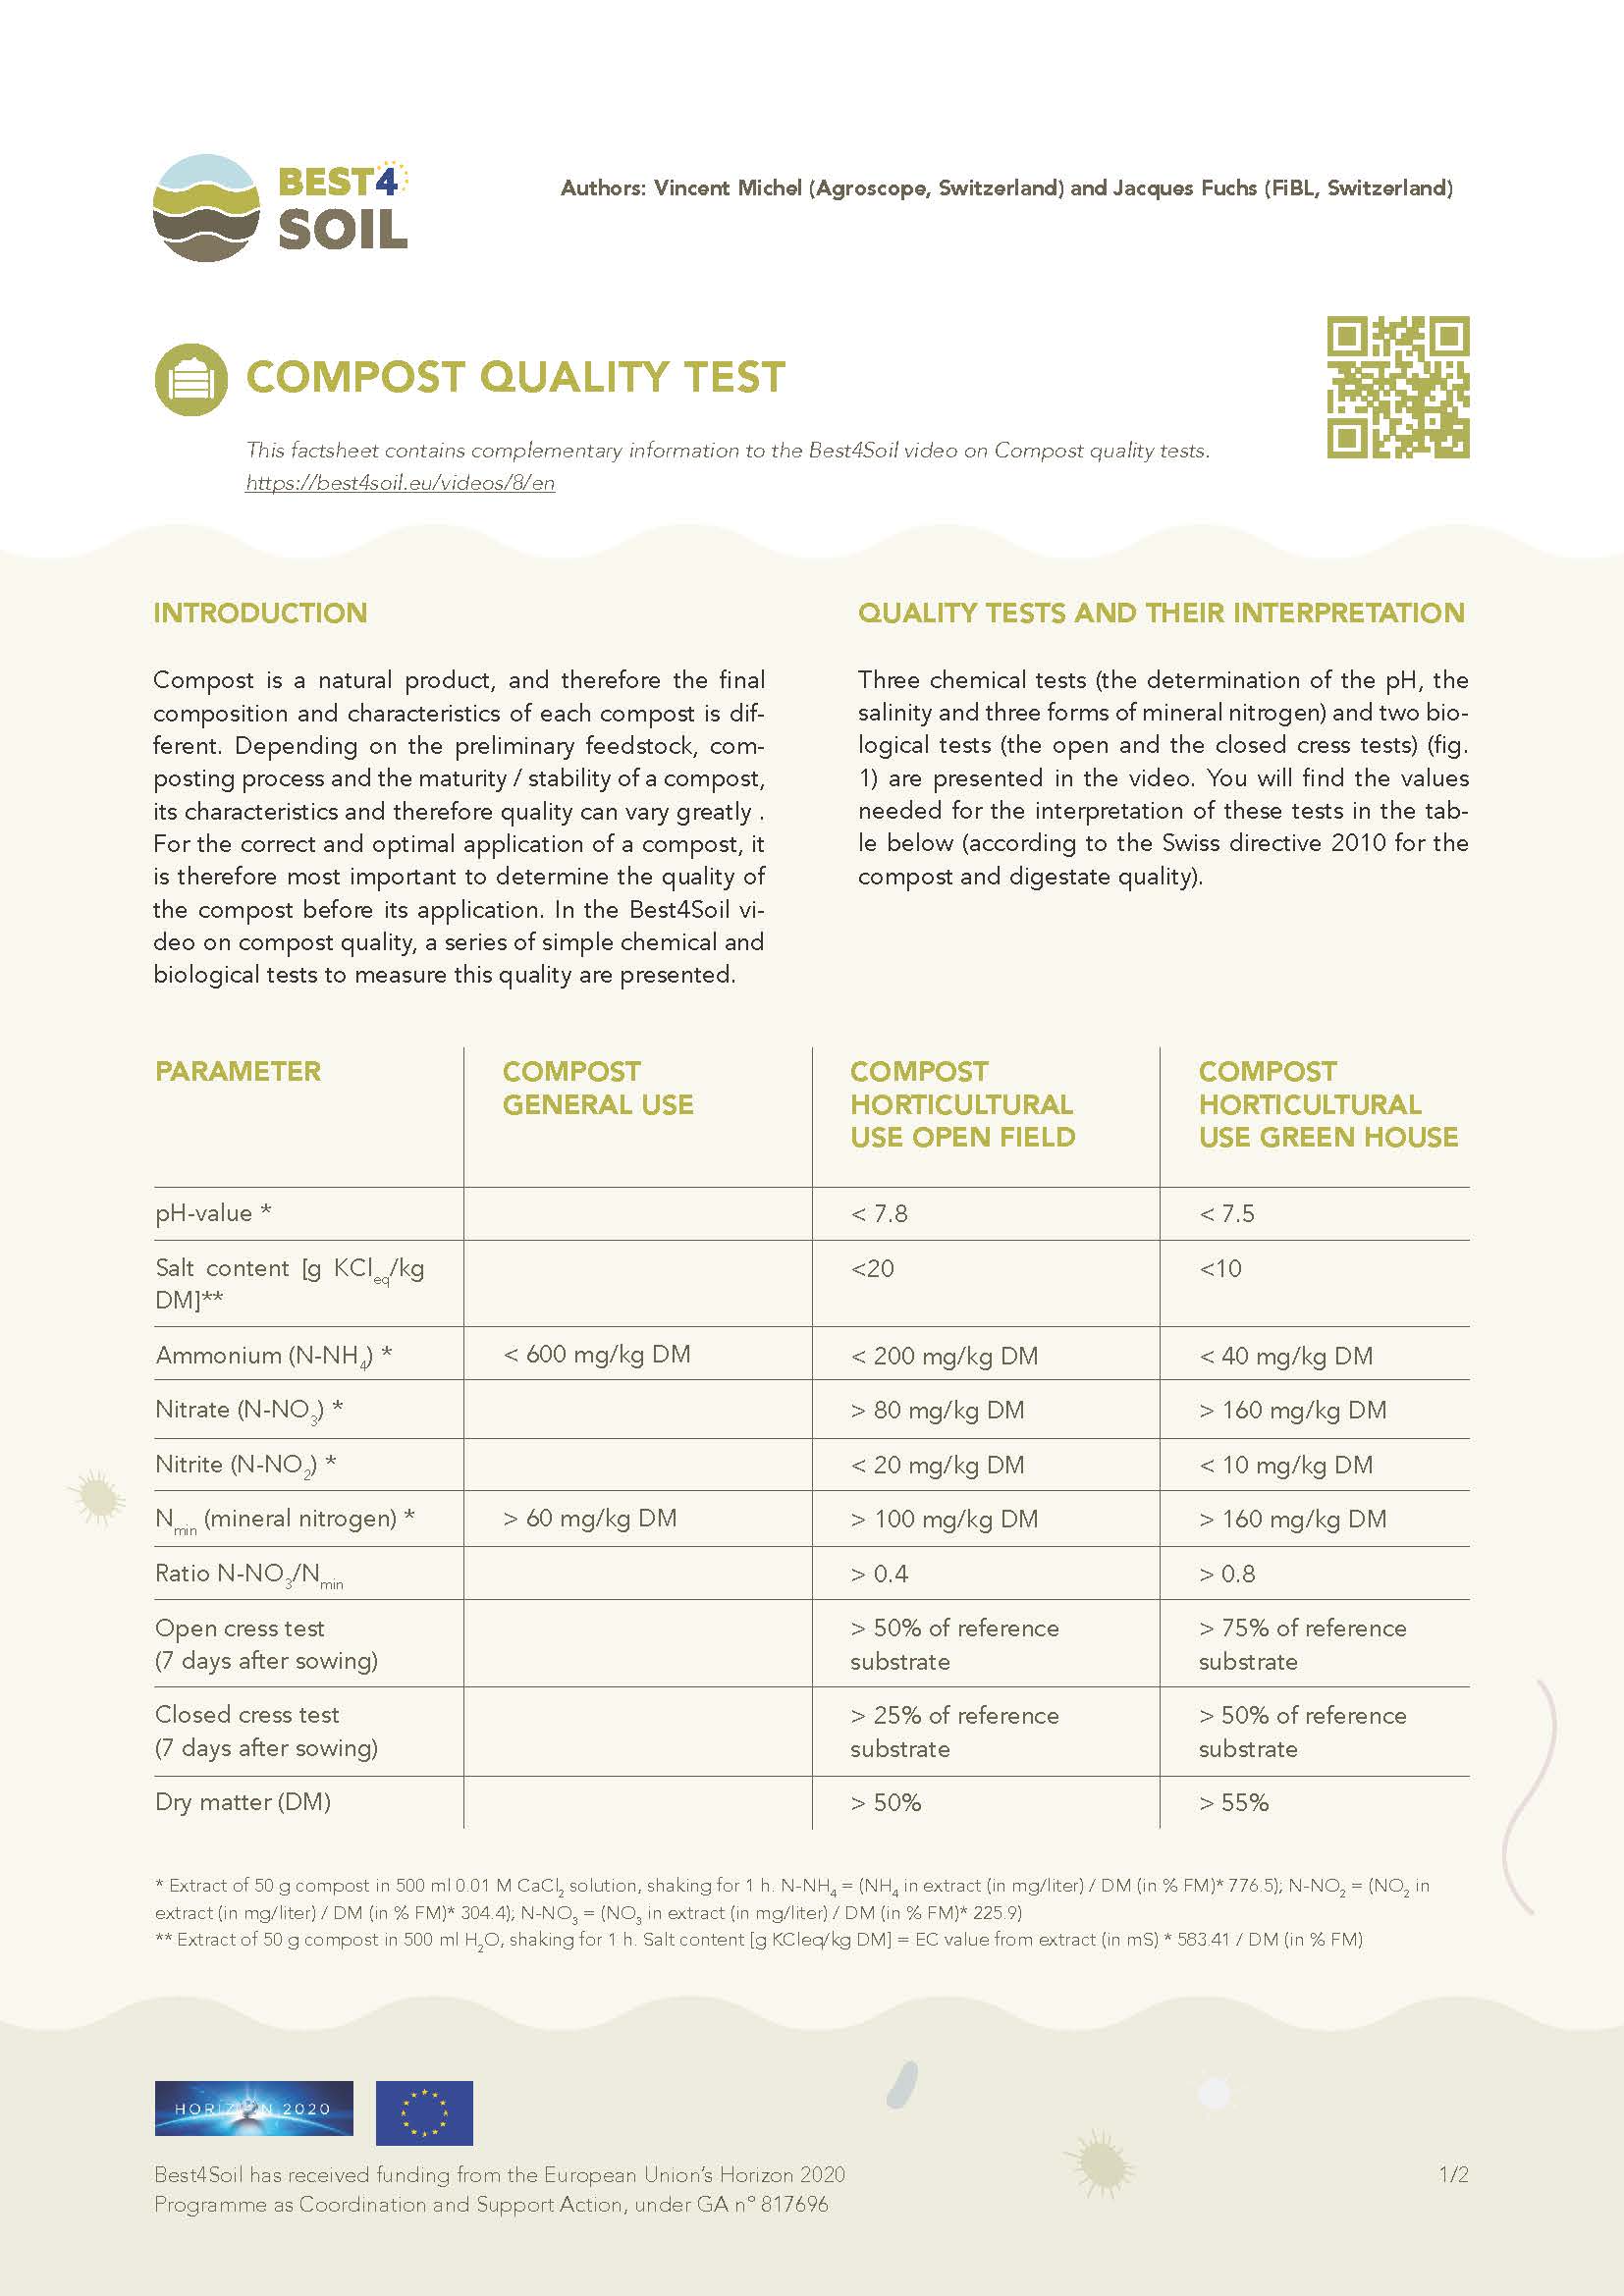 Kompostkvalitetstest (Best4Soil Factsheet)